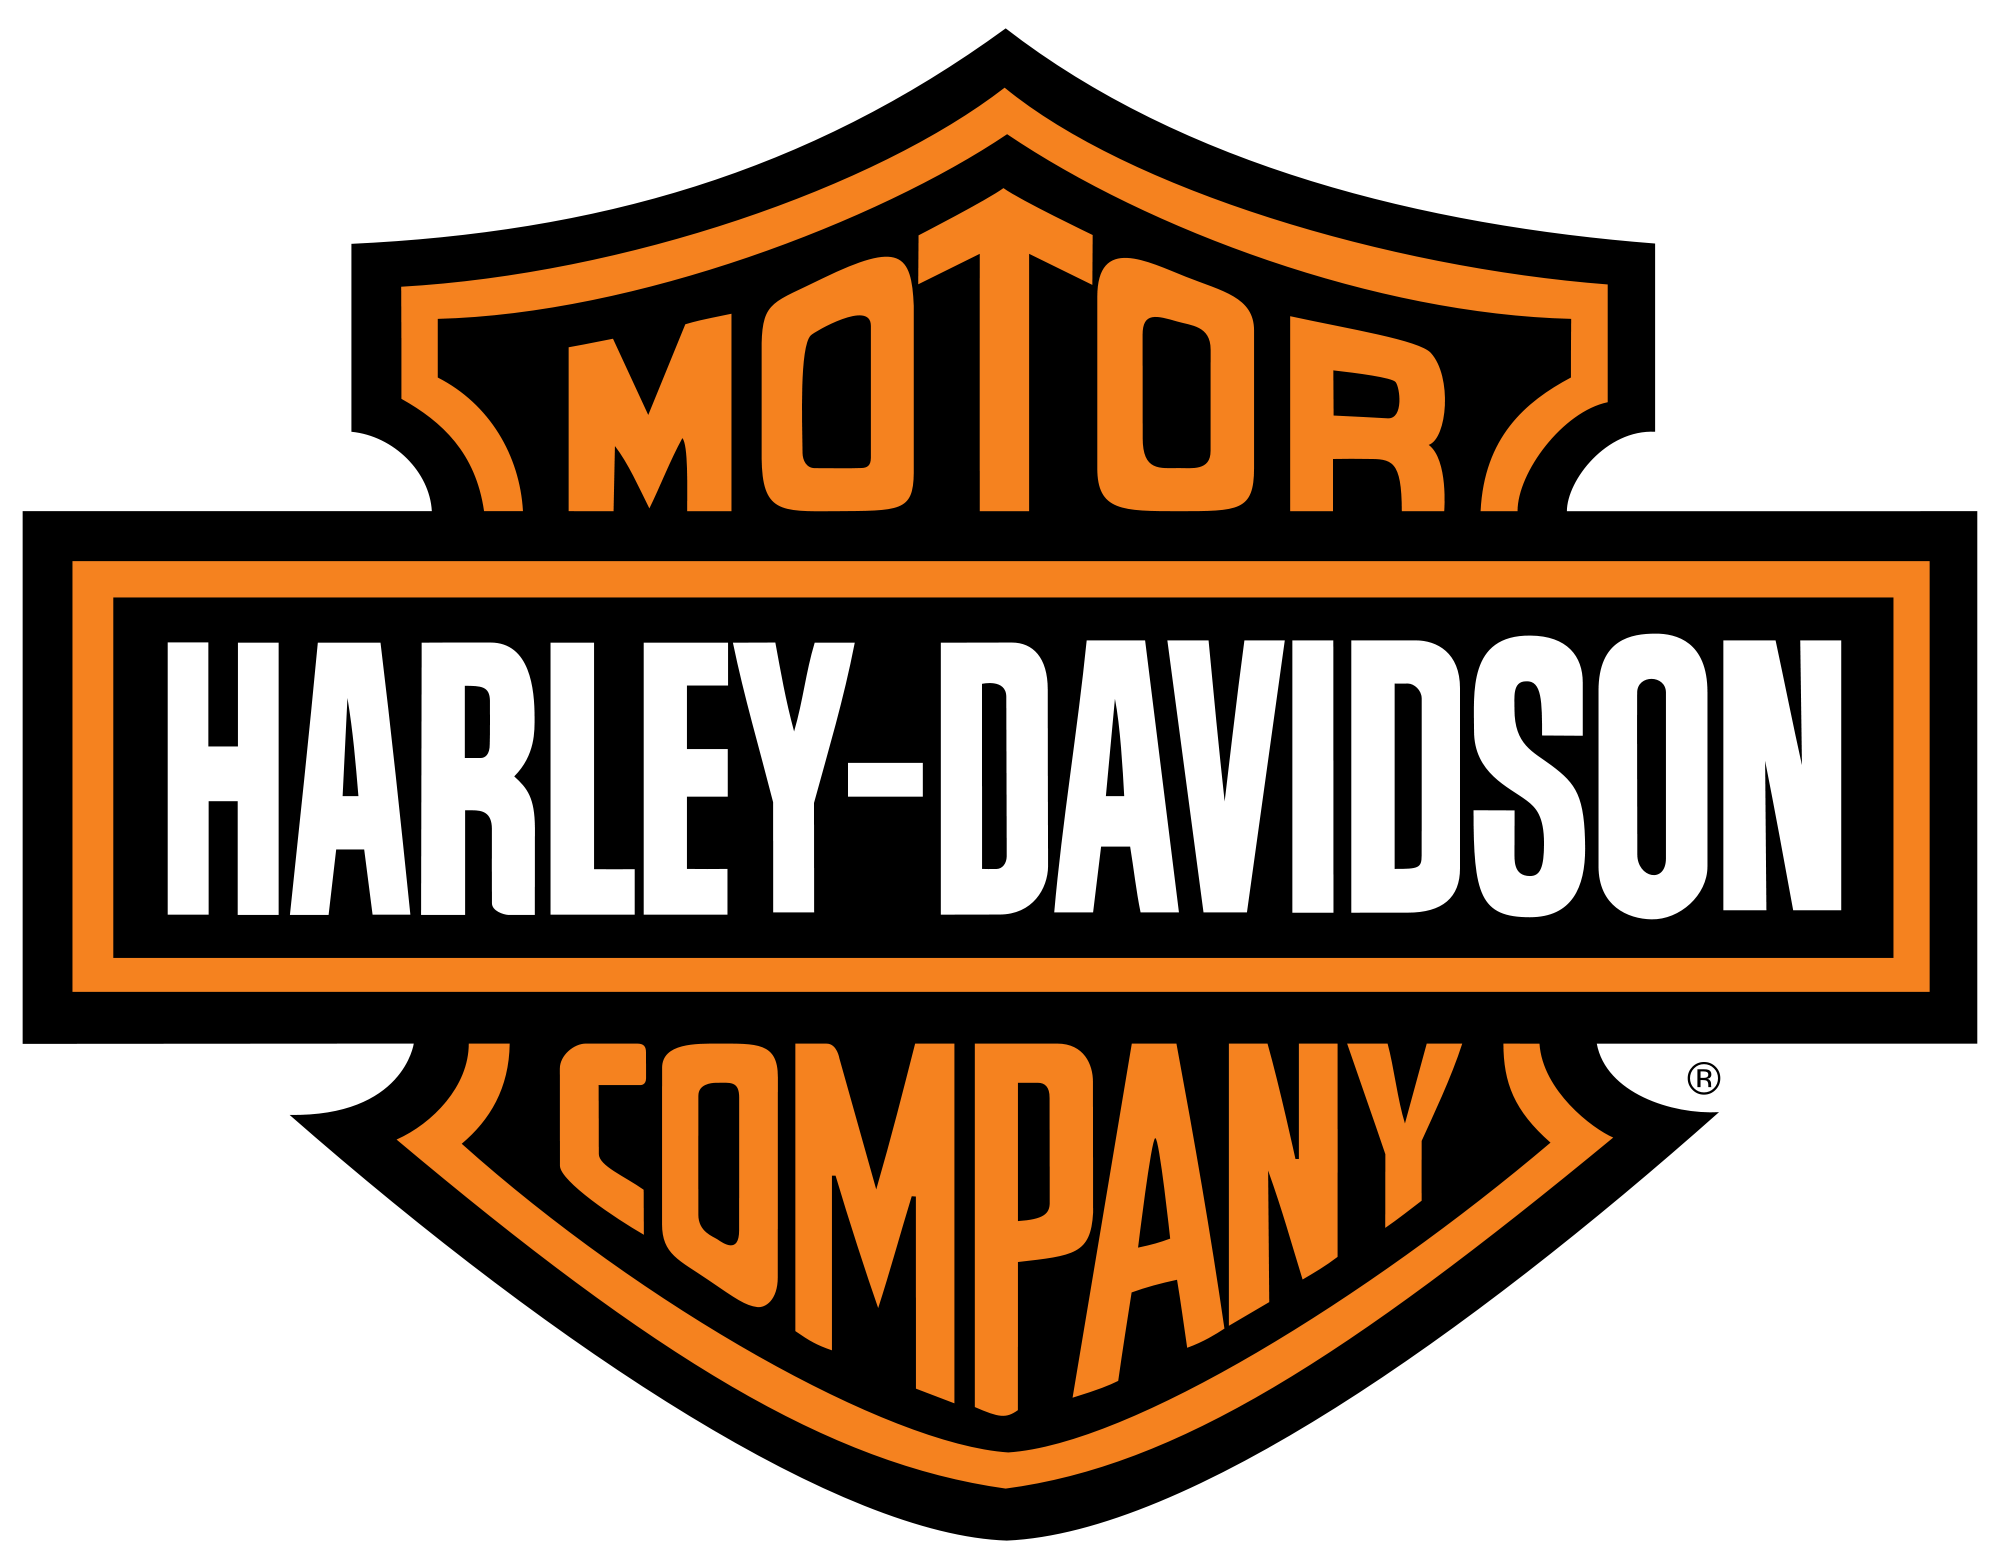 1-Harley-Davidson.png